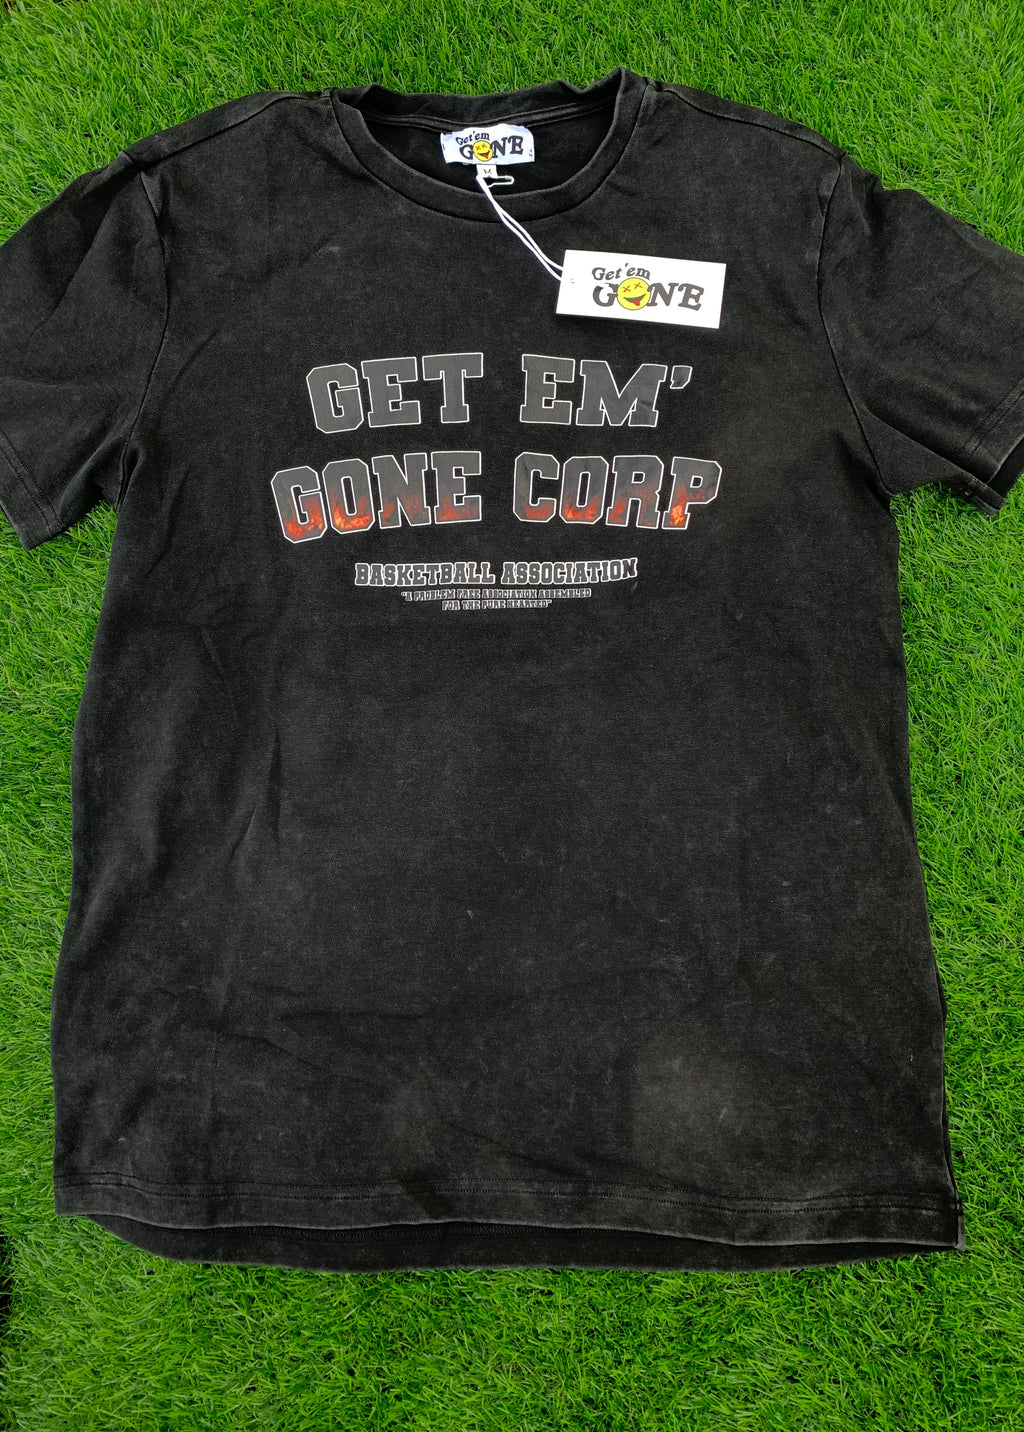 Acid Wash Corp “Basketball Association” T-Shirt